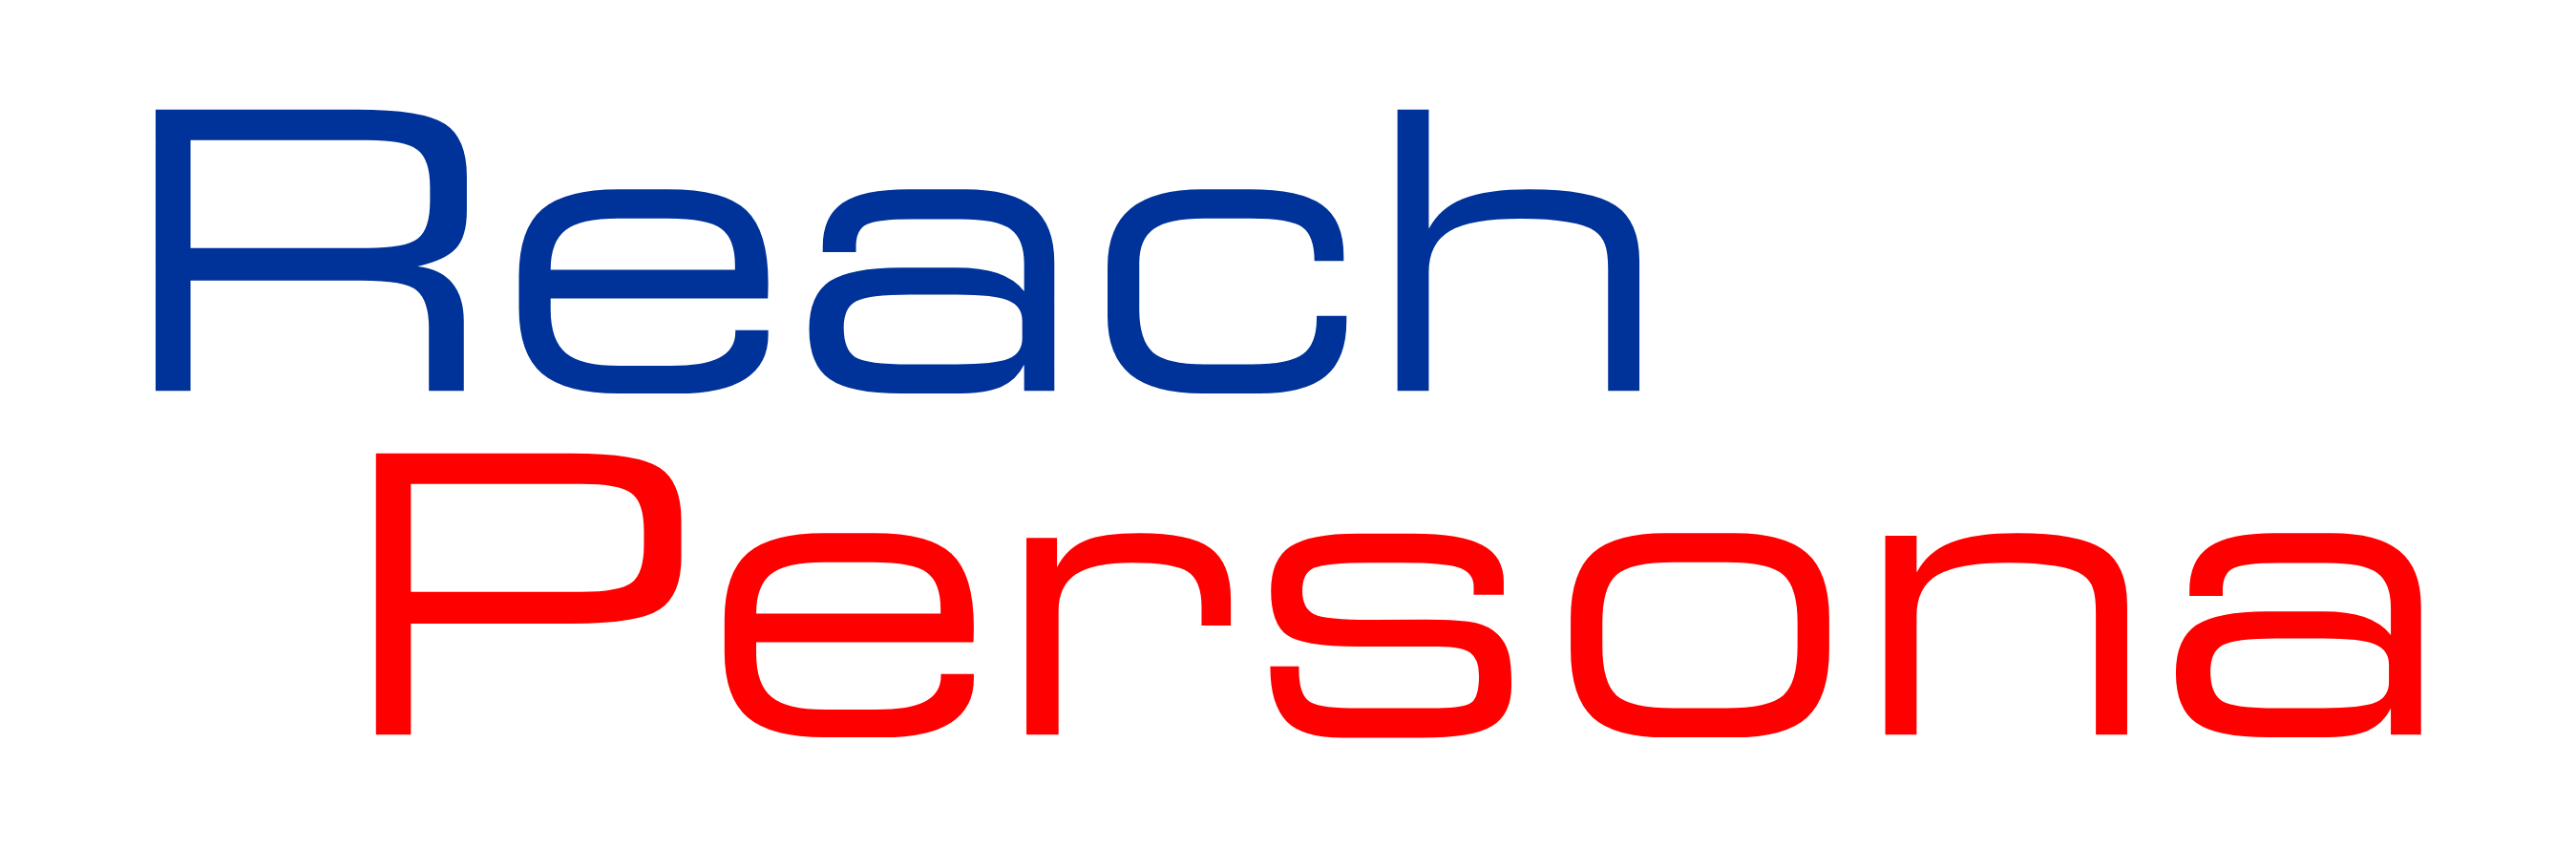 reach persona logo